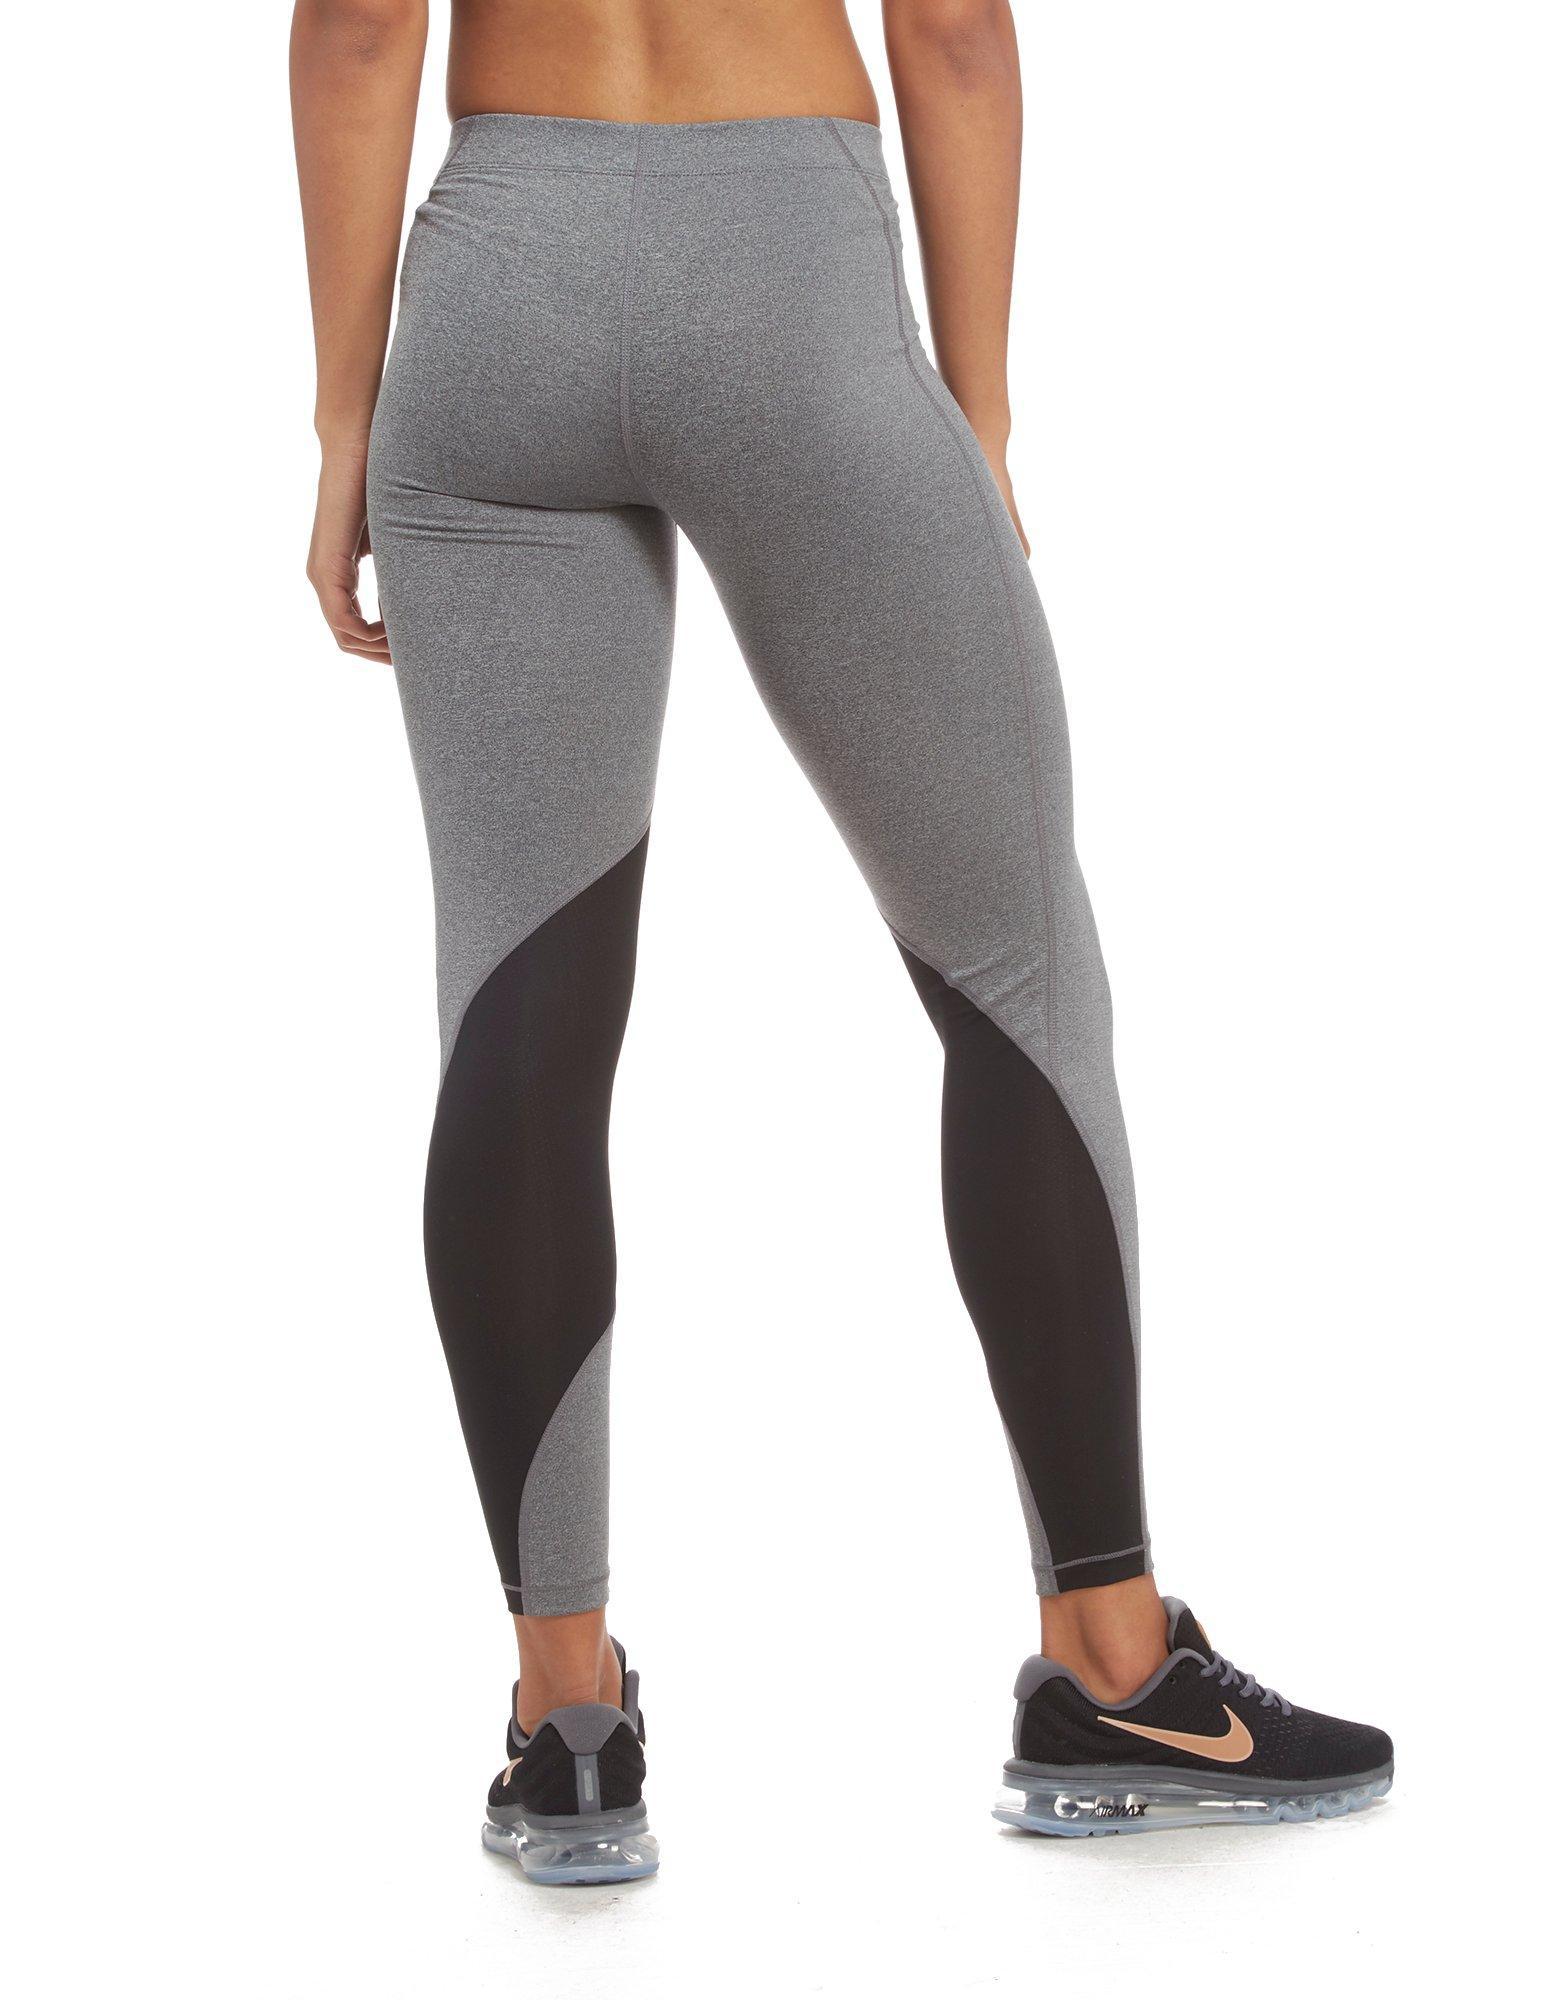 Nike Synthetic Pro Training Leggings in Grey/Black (Grey) - Lyst